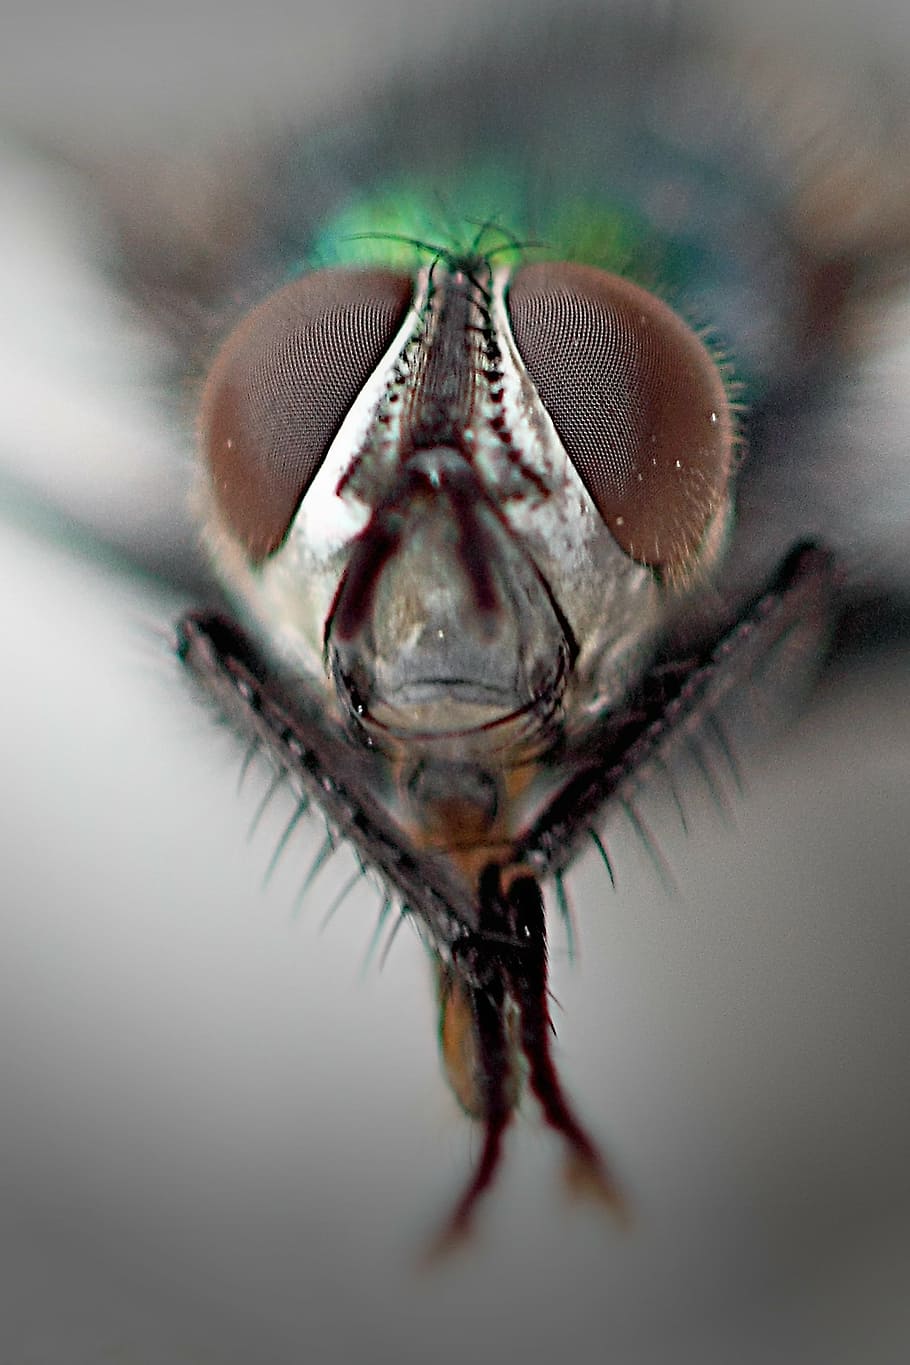 mosca comum, olhos compostos, macro, fechar, voar, natureza, inseto, mosca, macro de insetos, invertebrado